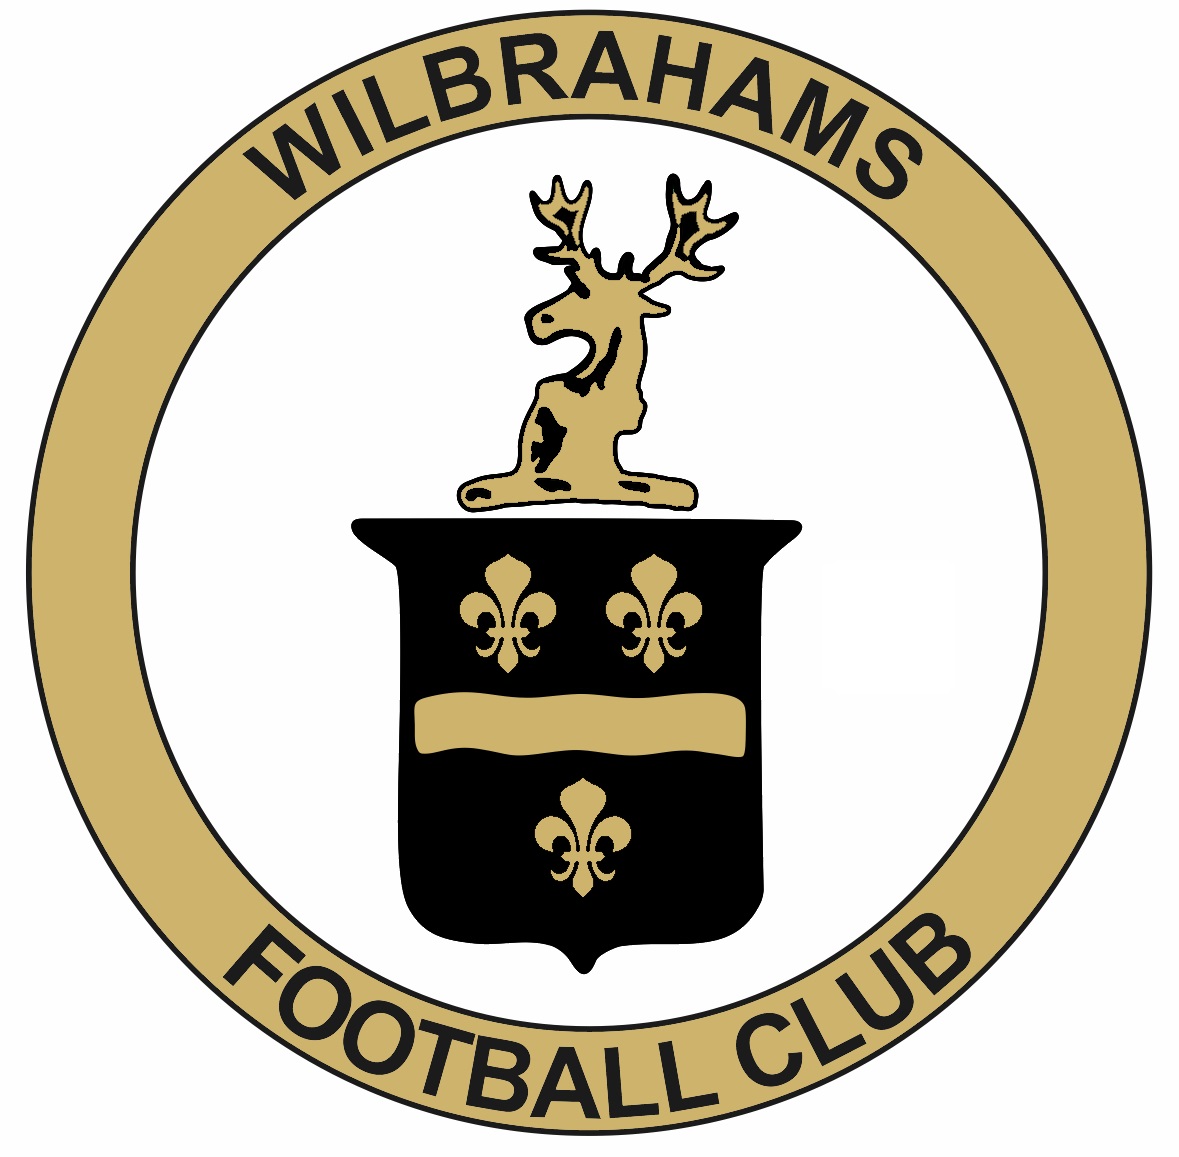 Wilbrahams' Football Club logo